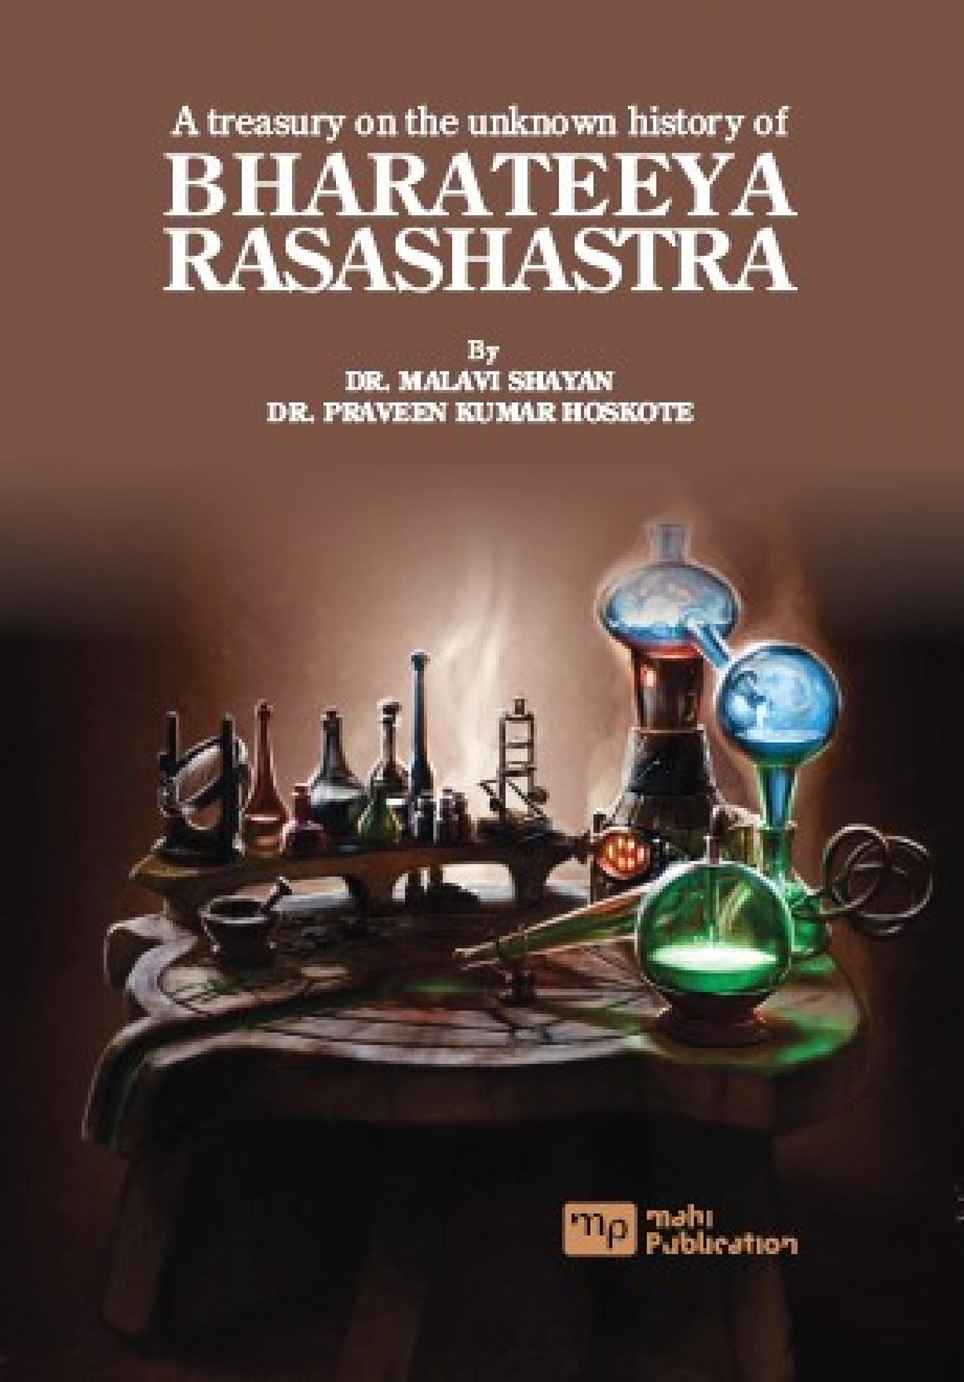 A Treasury on the Unknown History of Bharateeya Rasashastra